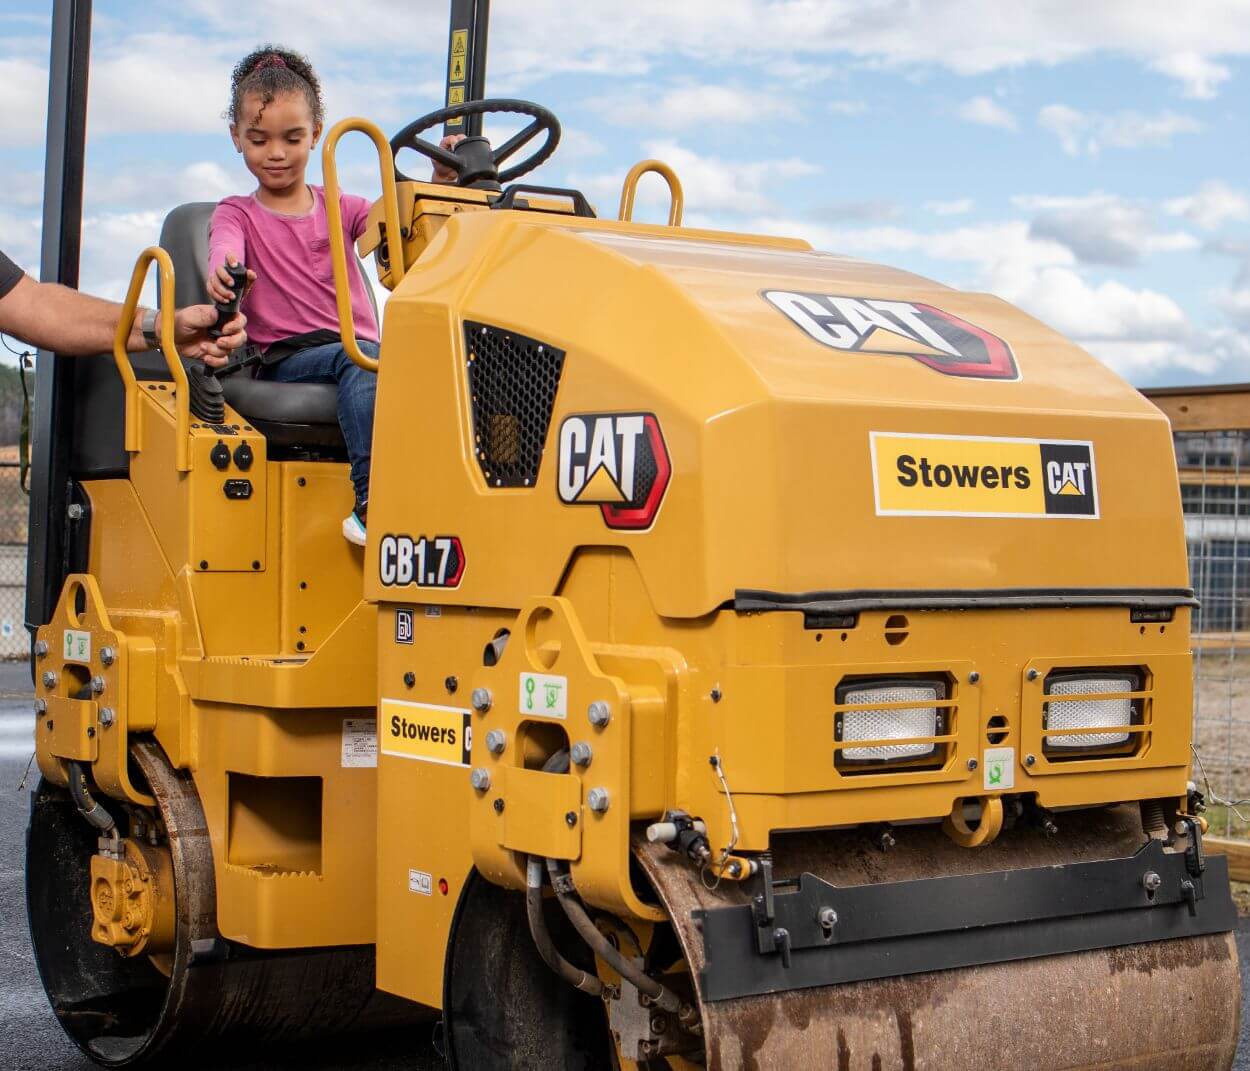 Kid operating a bulldozer